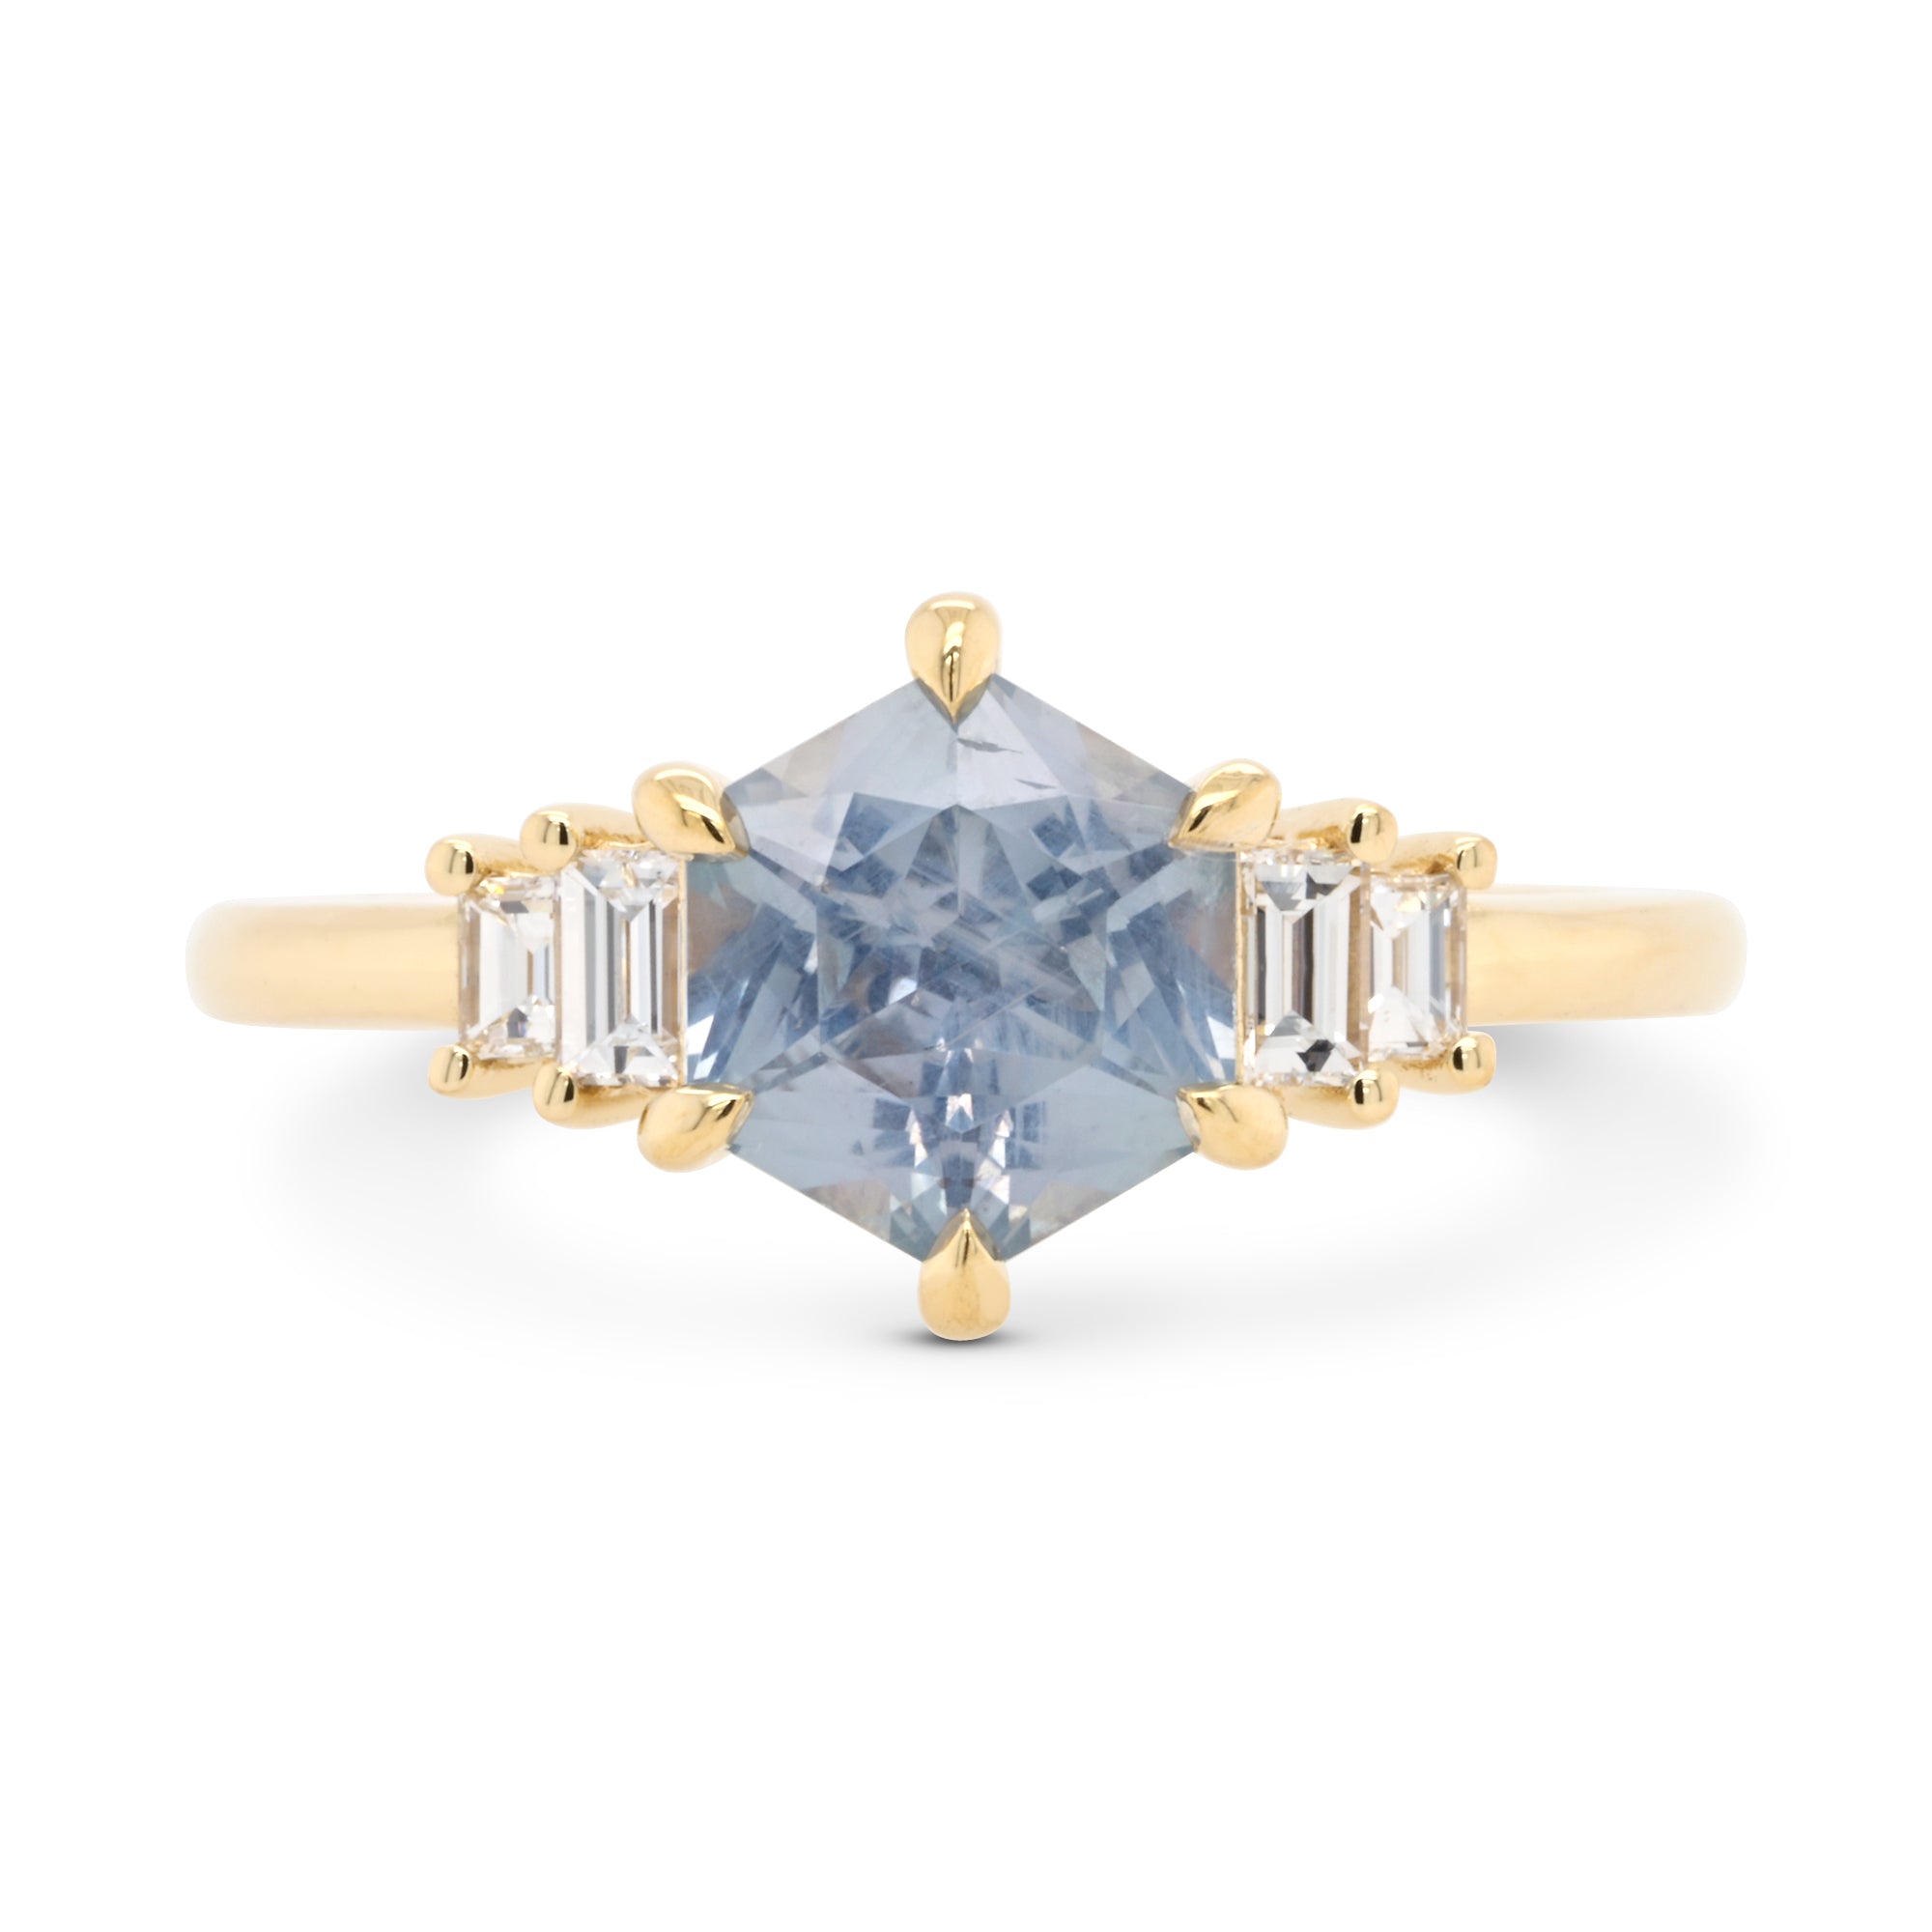 Light blue Montana hexagon sapphire engagement ring with baguette diamonds set in 14k yellow gold